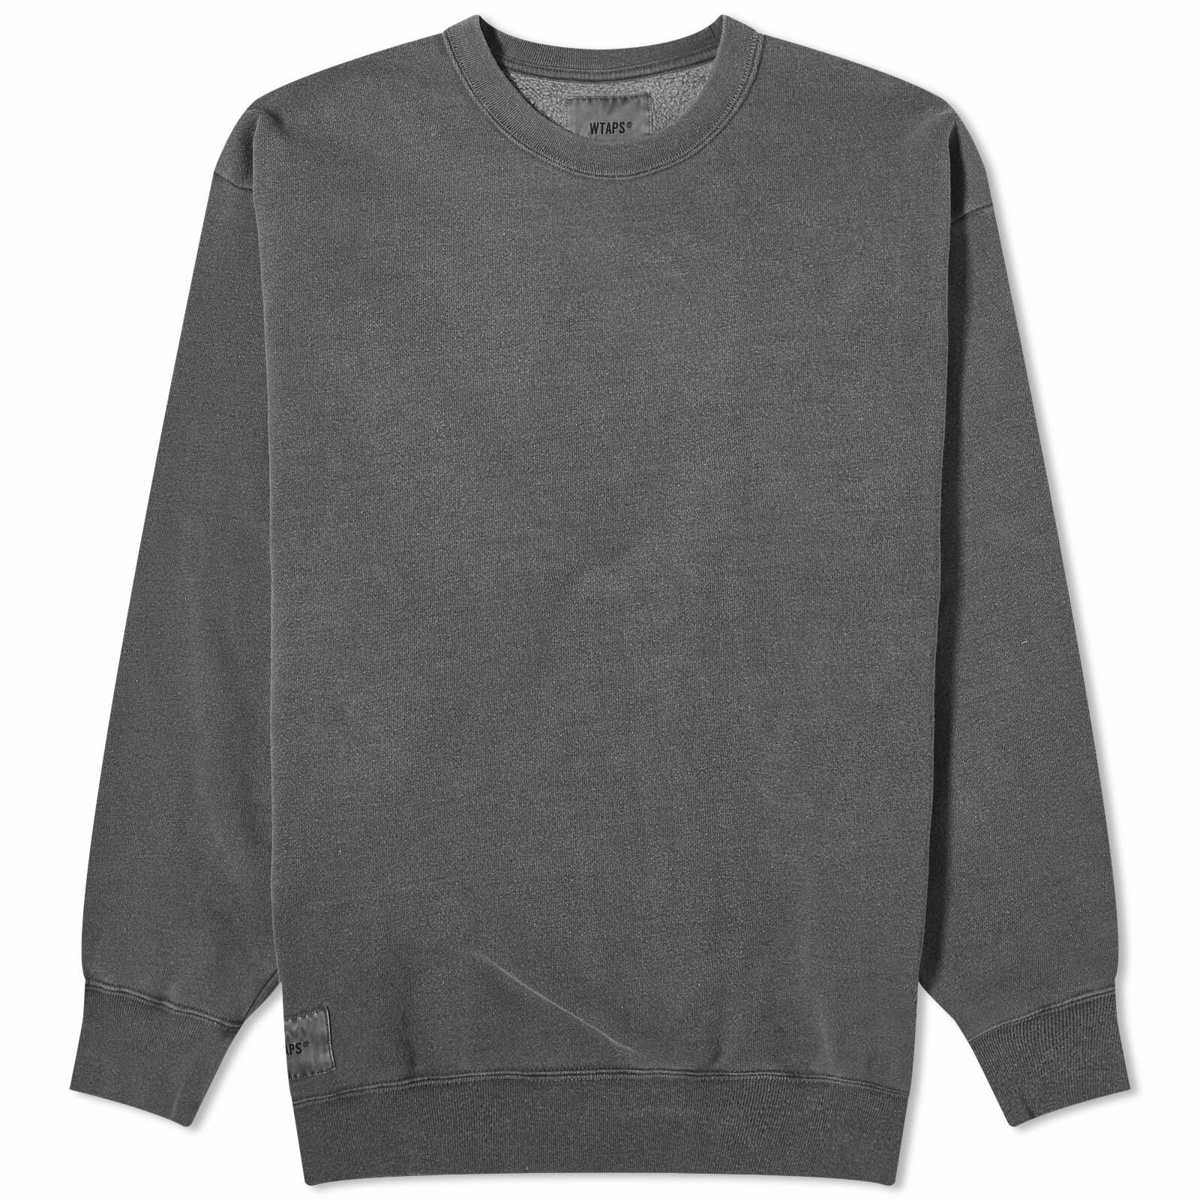 WTAPS - Layered Intarsia-Knit Sweater - Black WTAPS